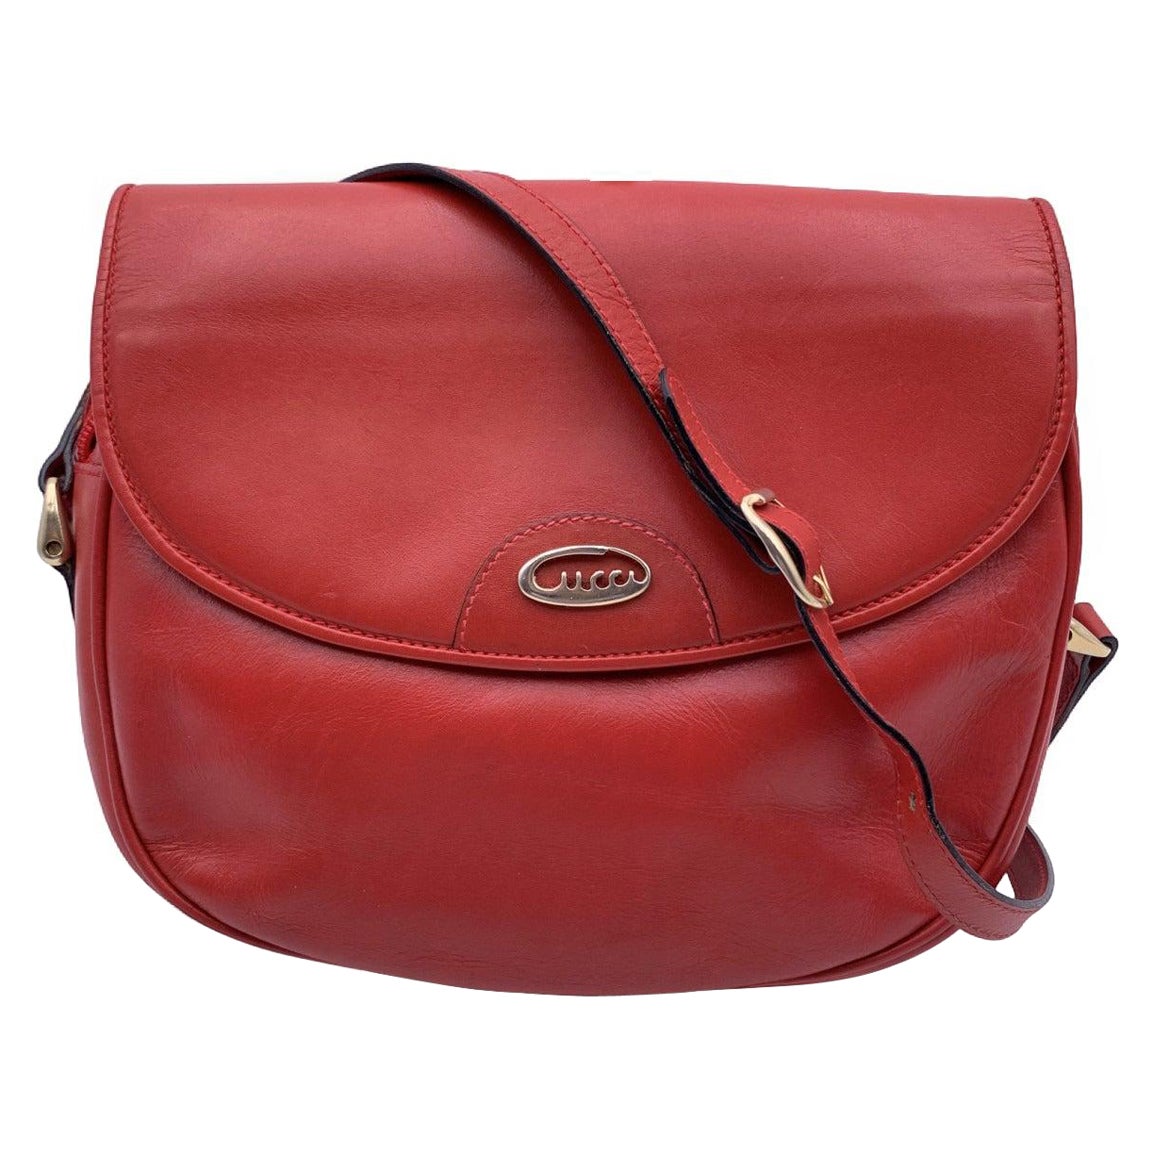 Gucci Vintage Red Leather Flap Crossbody Messenger Bag For Sale